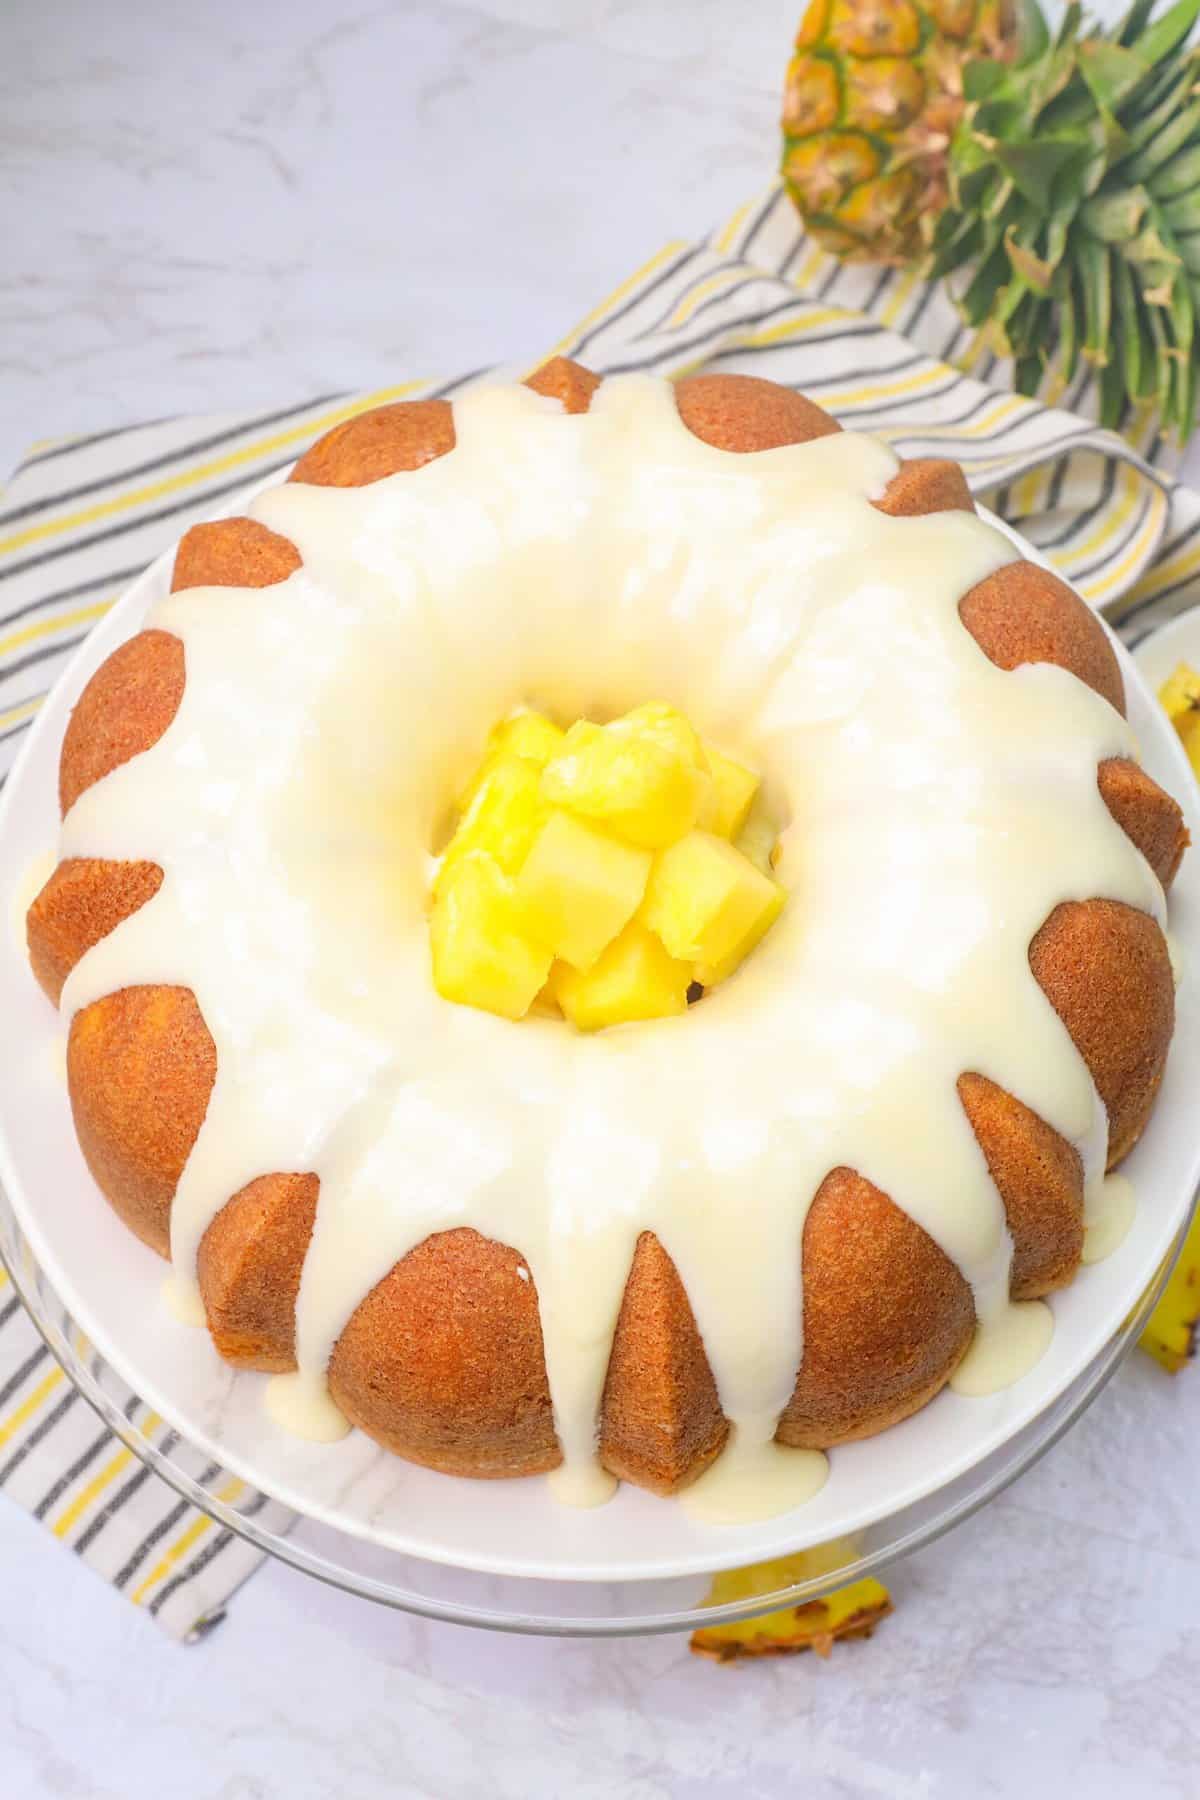 Freshly glazed and decadent pineapple pound cake ready to serve